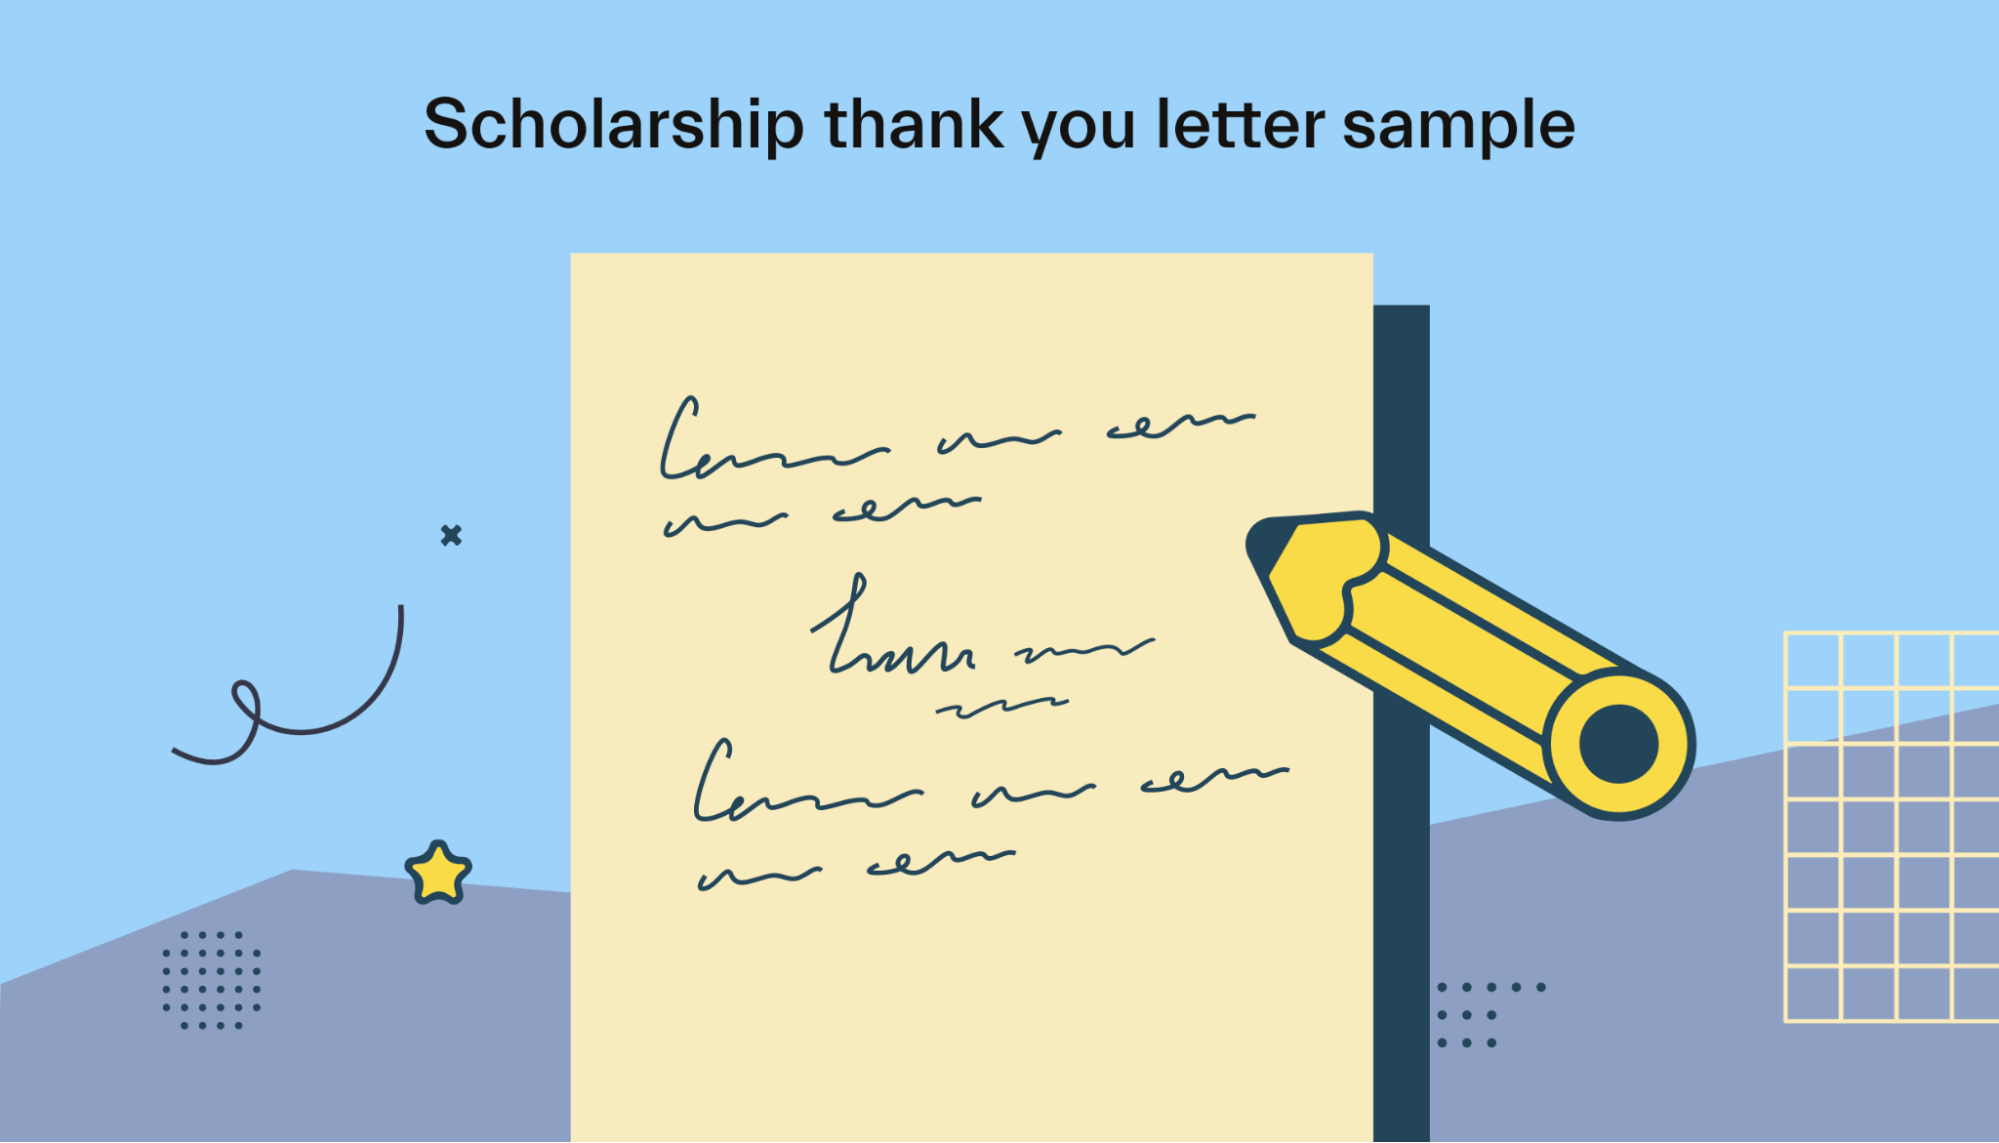 Scholarship thank you letter sample